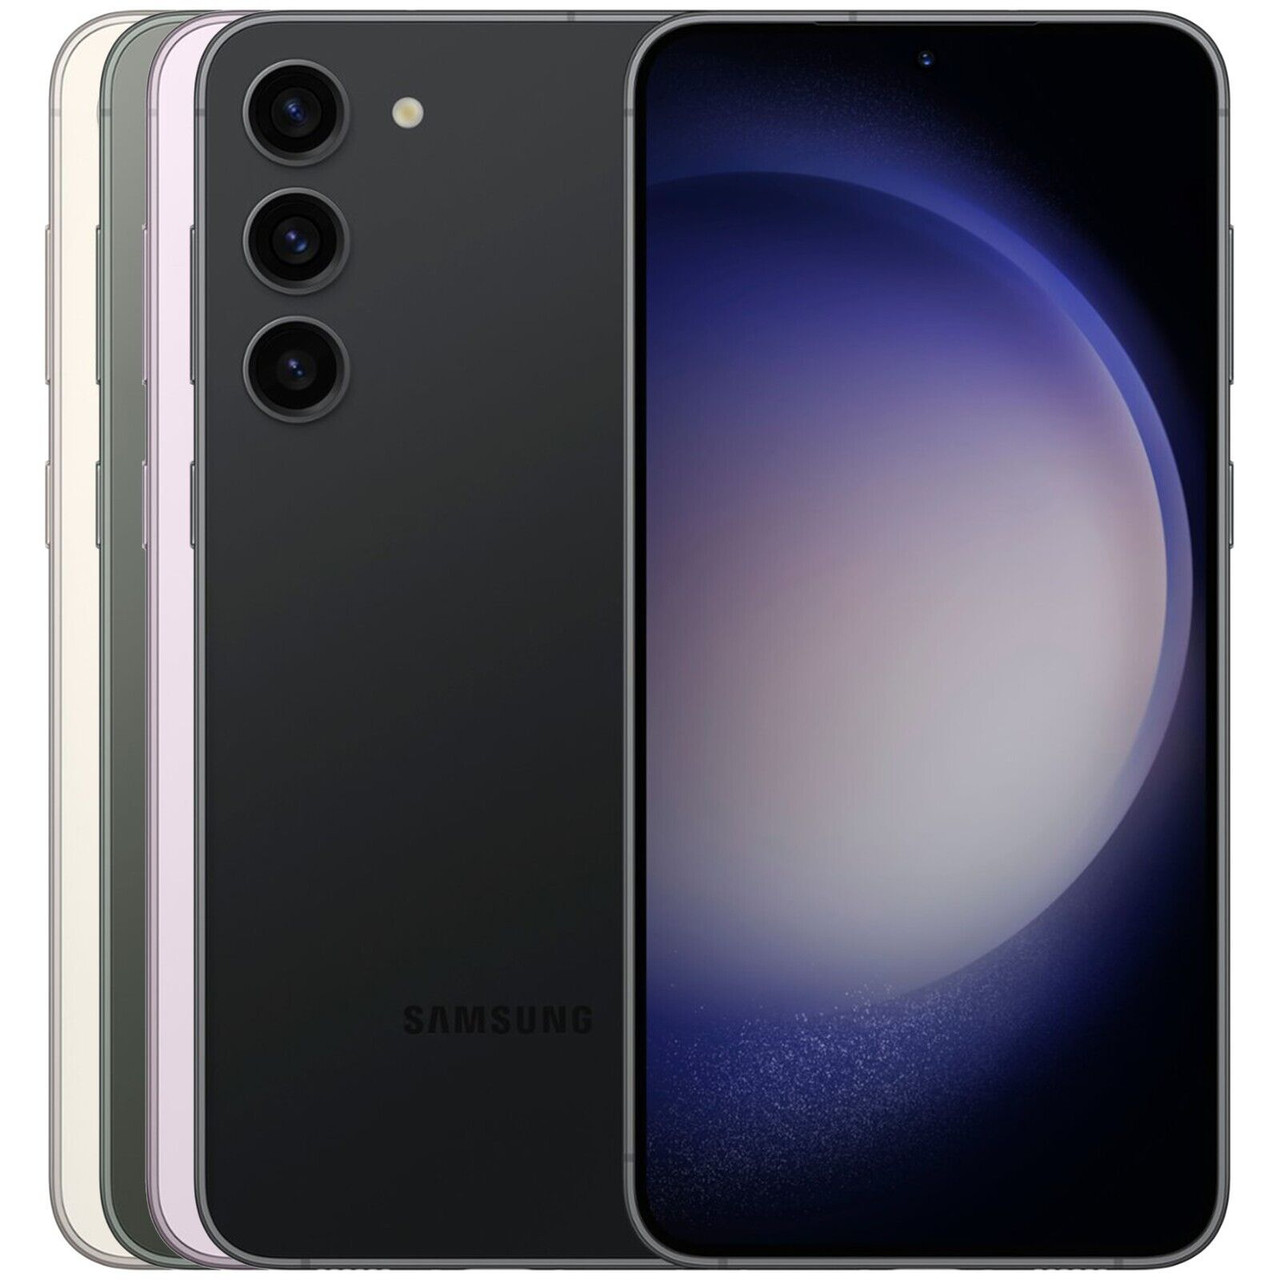 NEW Samsung Galaxy S23 SM-S911U1 - 256GB - Factory Unlocked